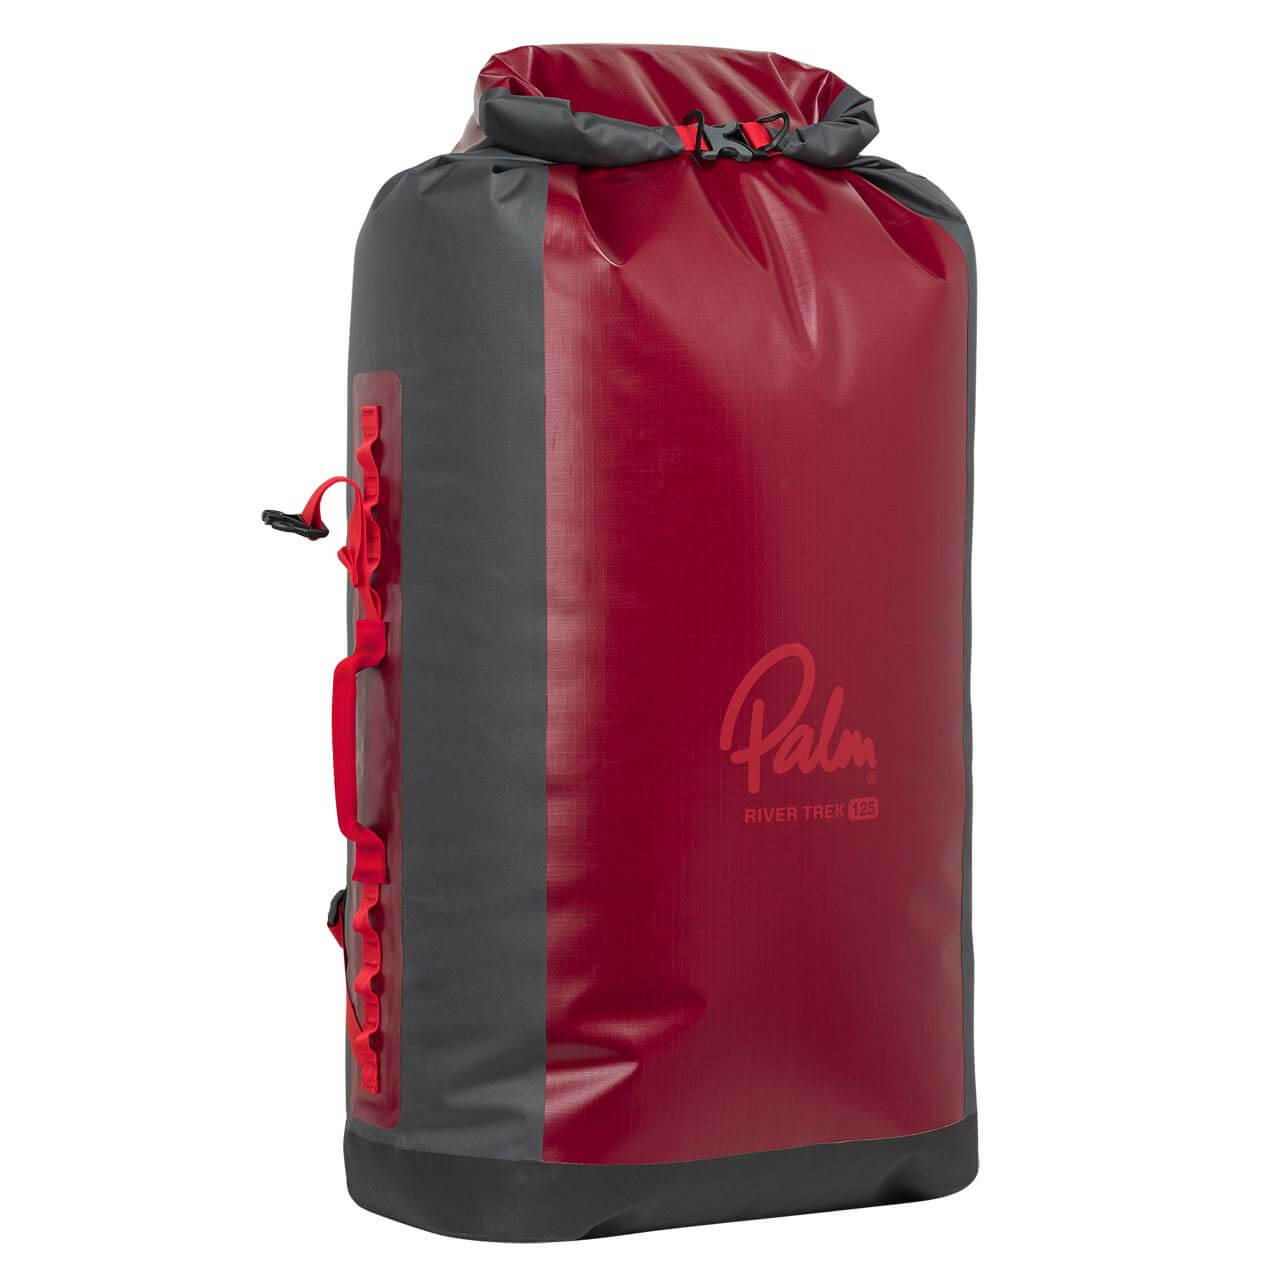 Palm River Trek Backpack - Chilli/Jet Grey, 125 L